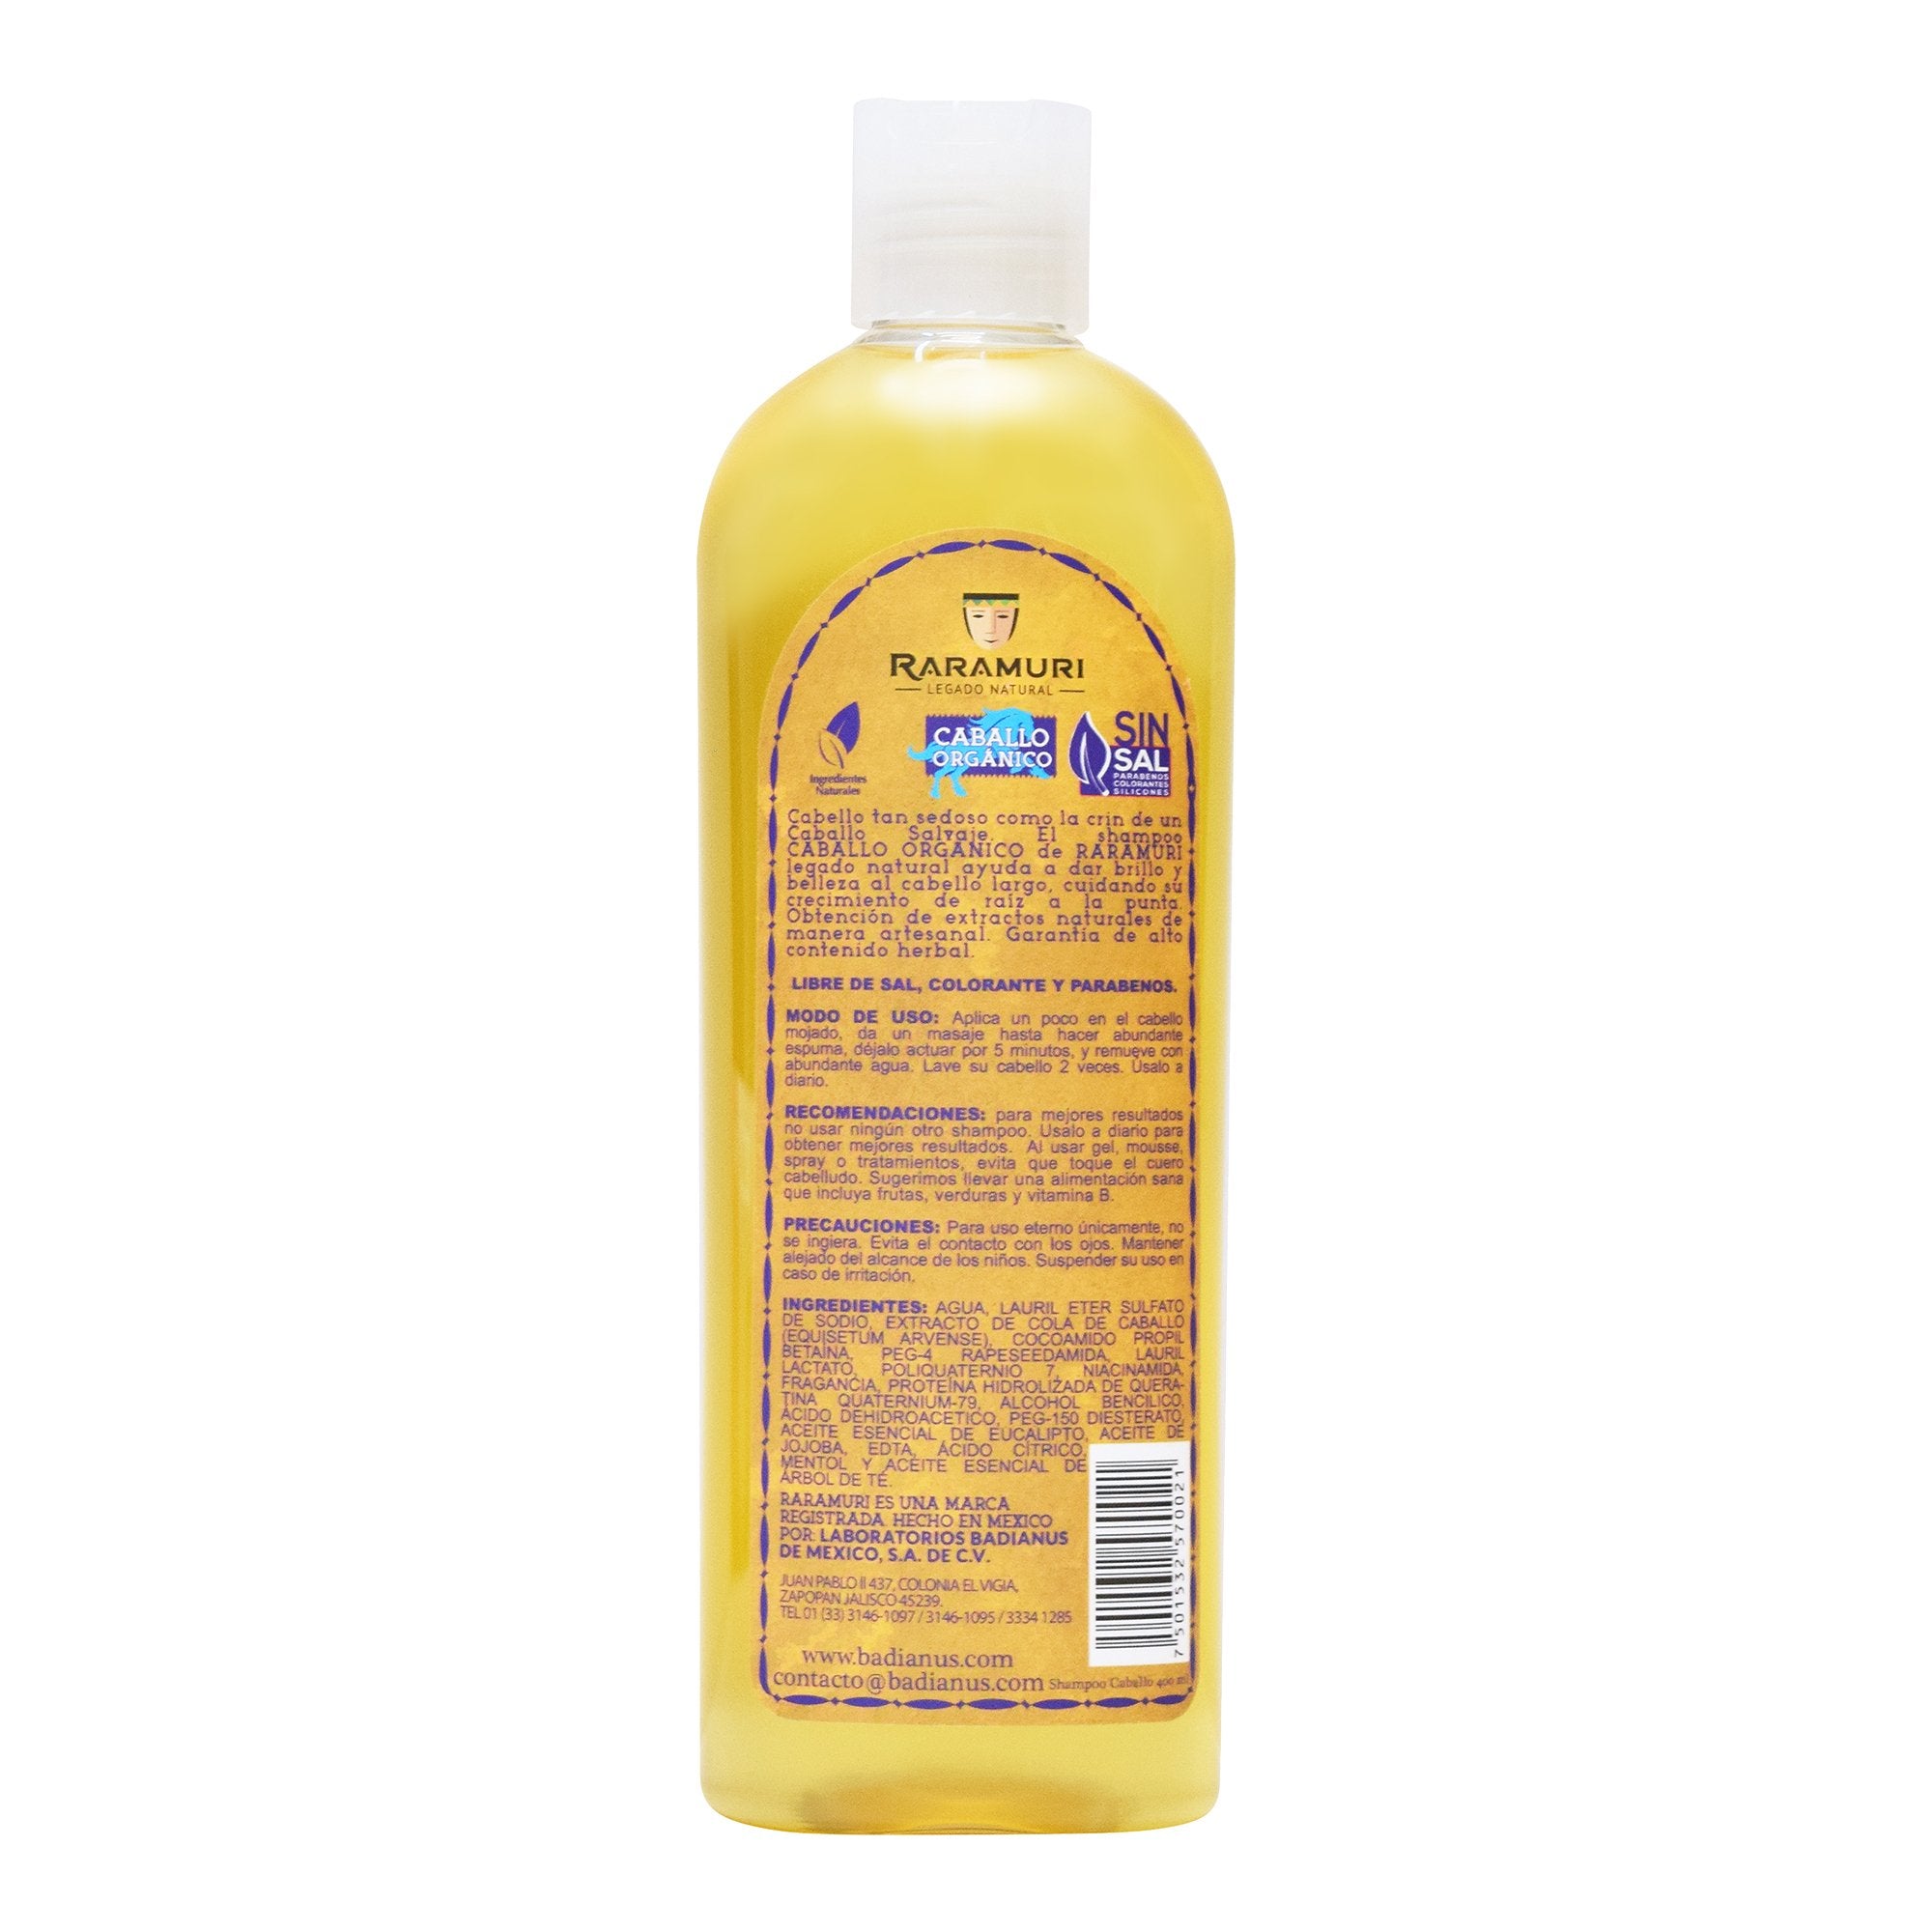 Shampoo Caballo Organico 400 Ml